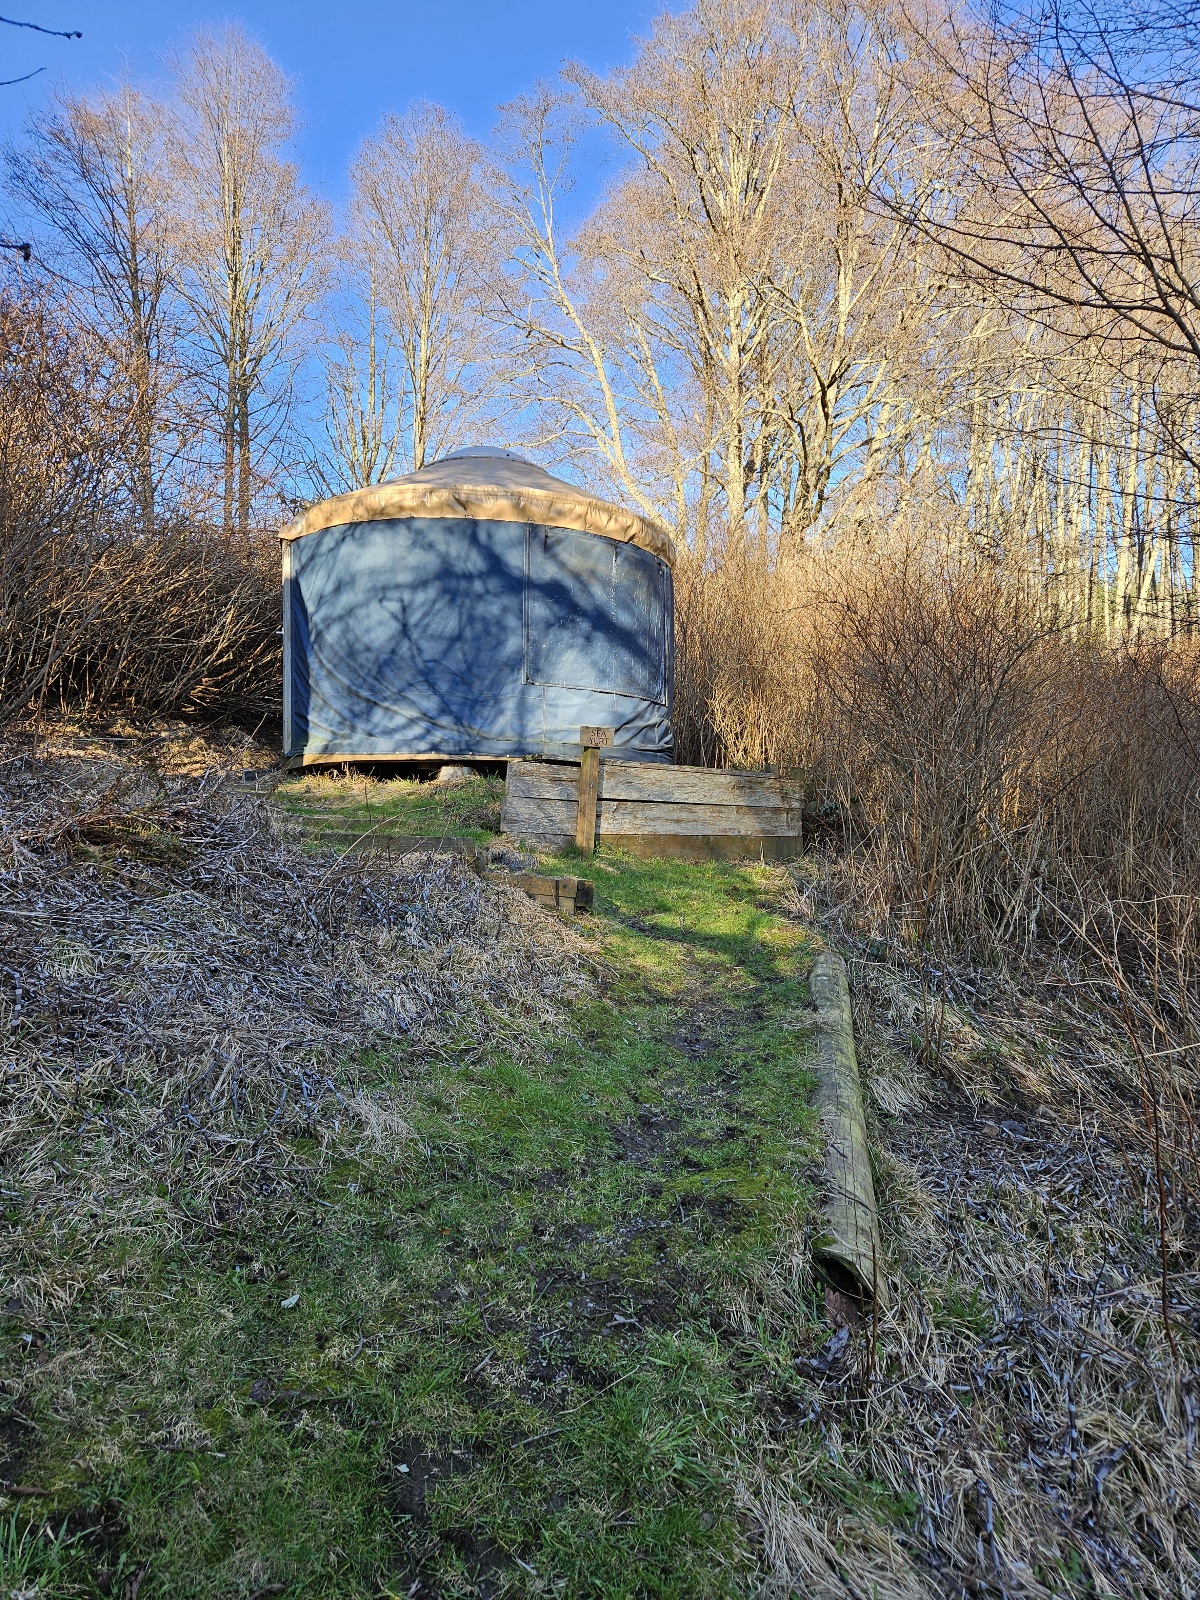 "Sea yurt"